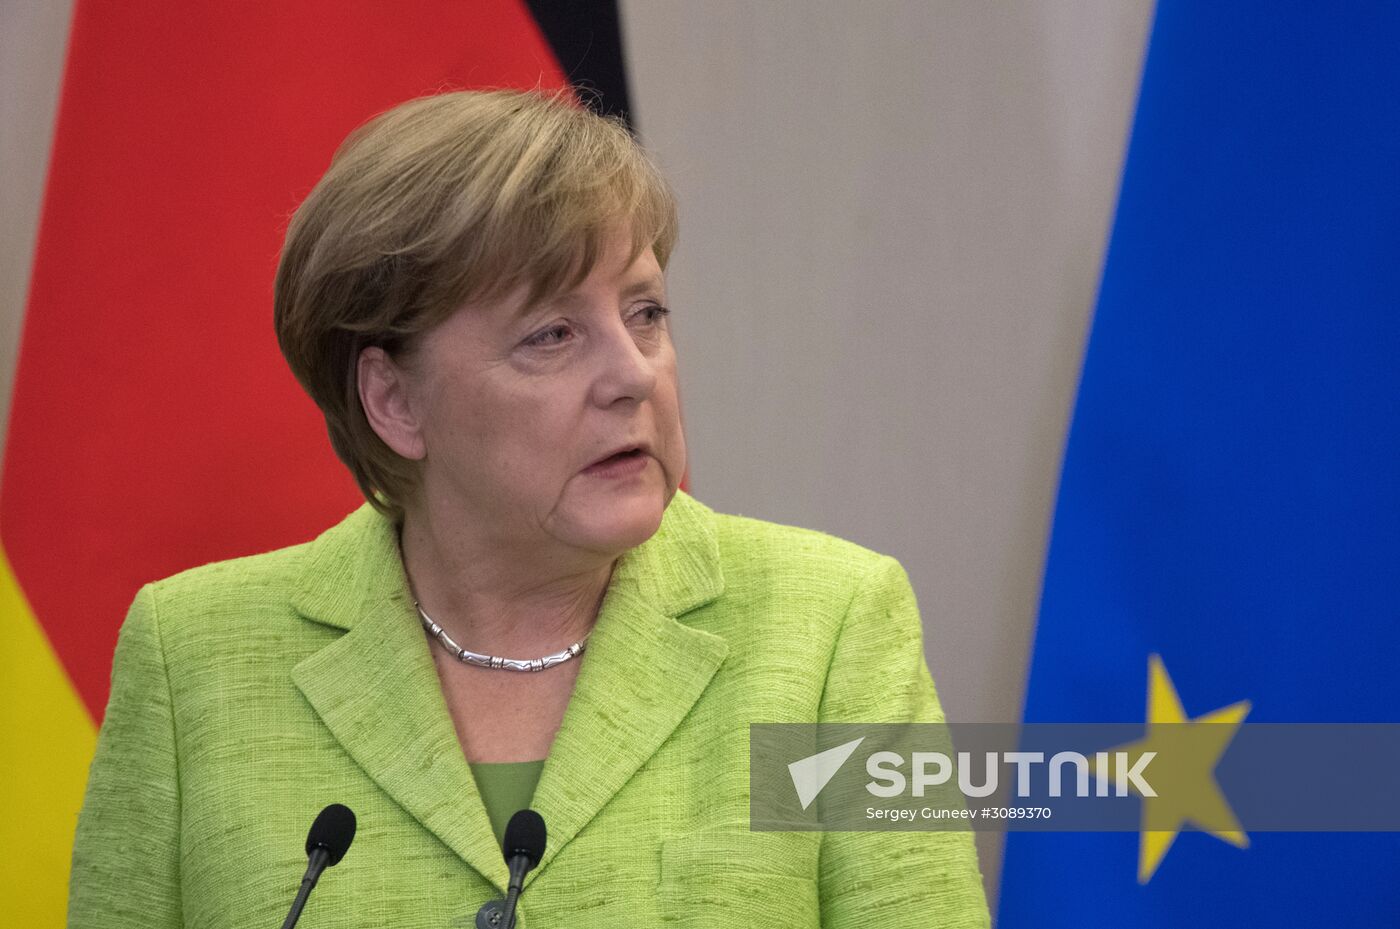 Negotiations between Russian President Vladimir Putin and Federal Chancellor of Germany Angela Merkel